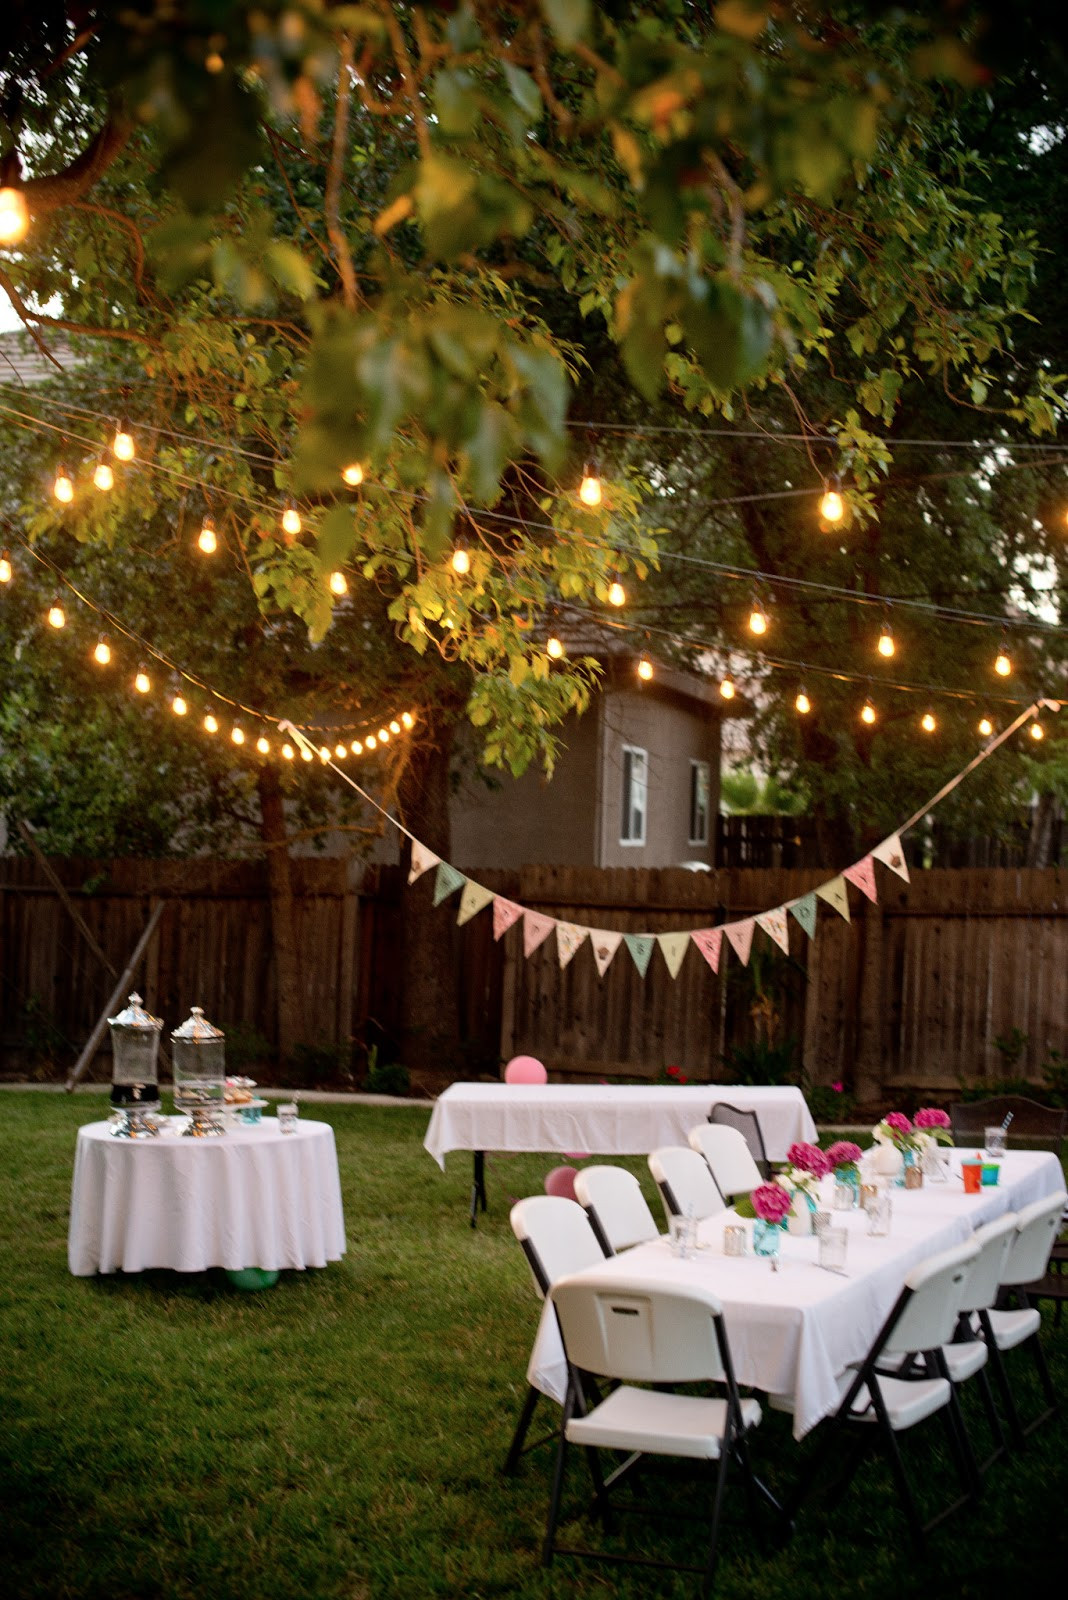 Backyard Engagement Party Decorating Ideas
 Domestic Fashionista Backyard Birthday Fun Pink